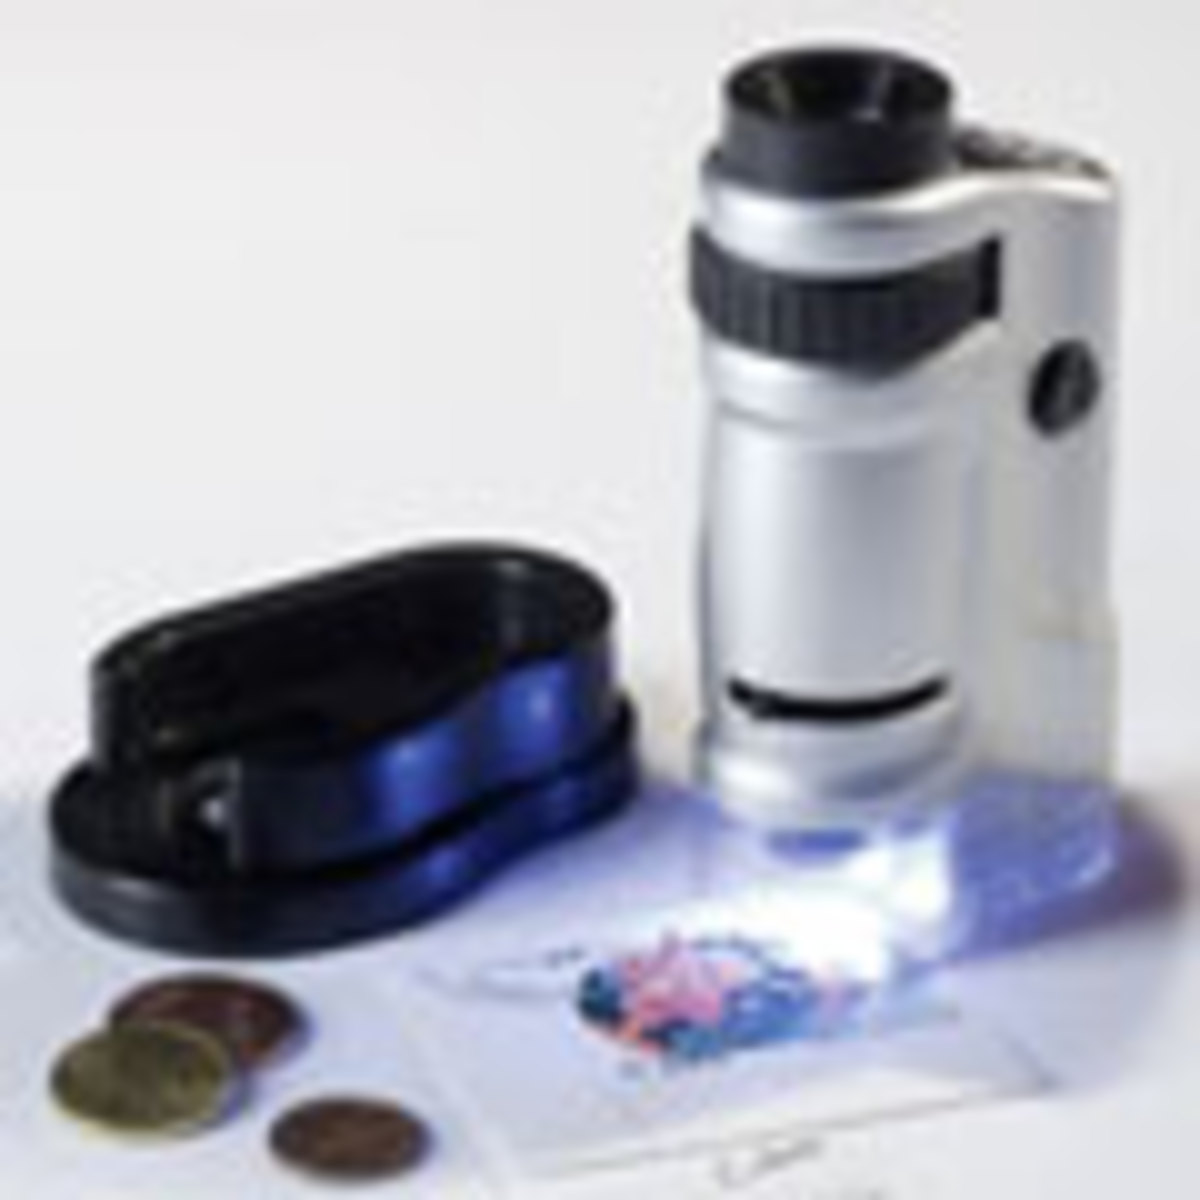 Zoom Pocket Microscope